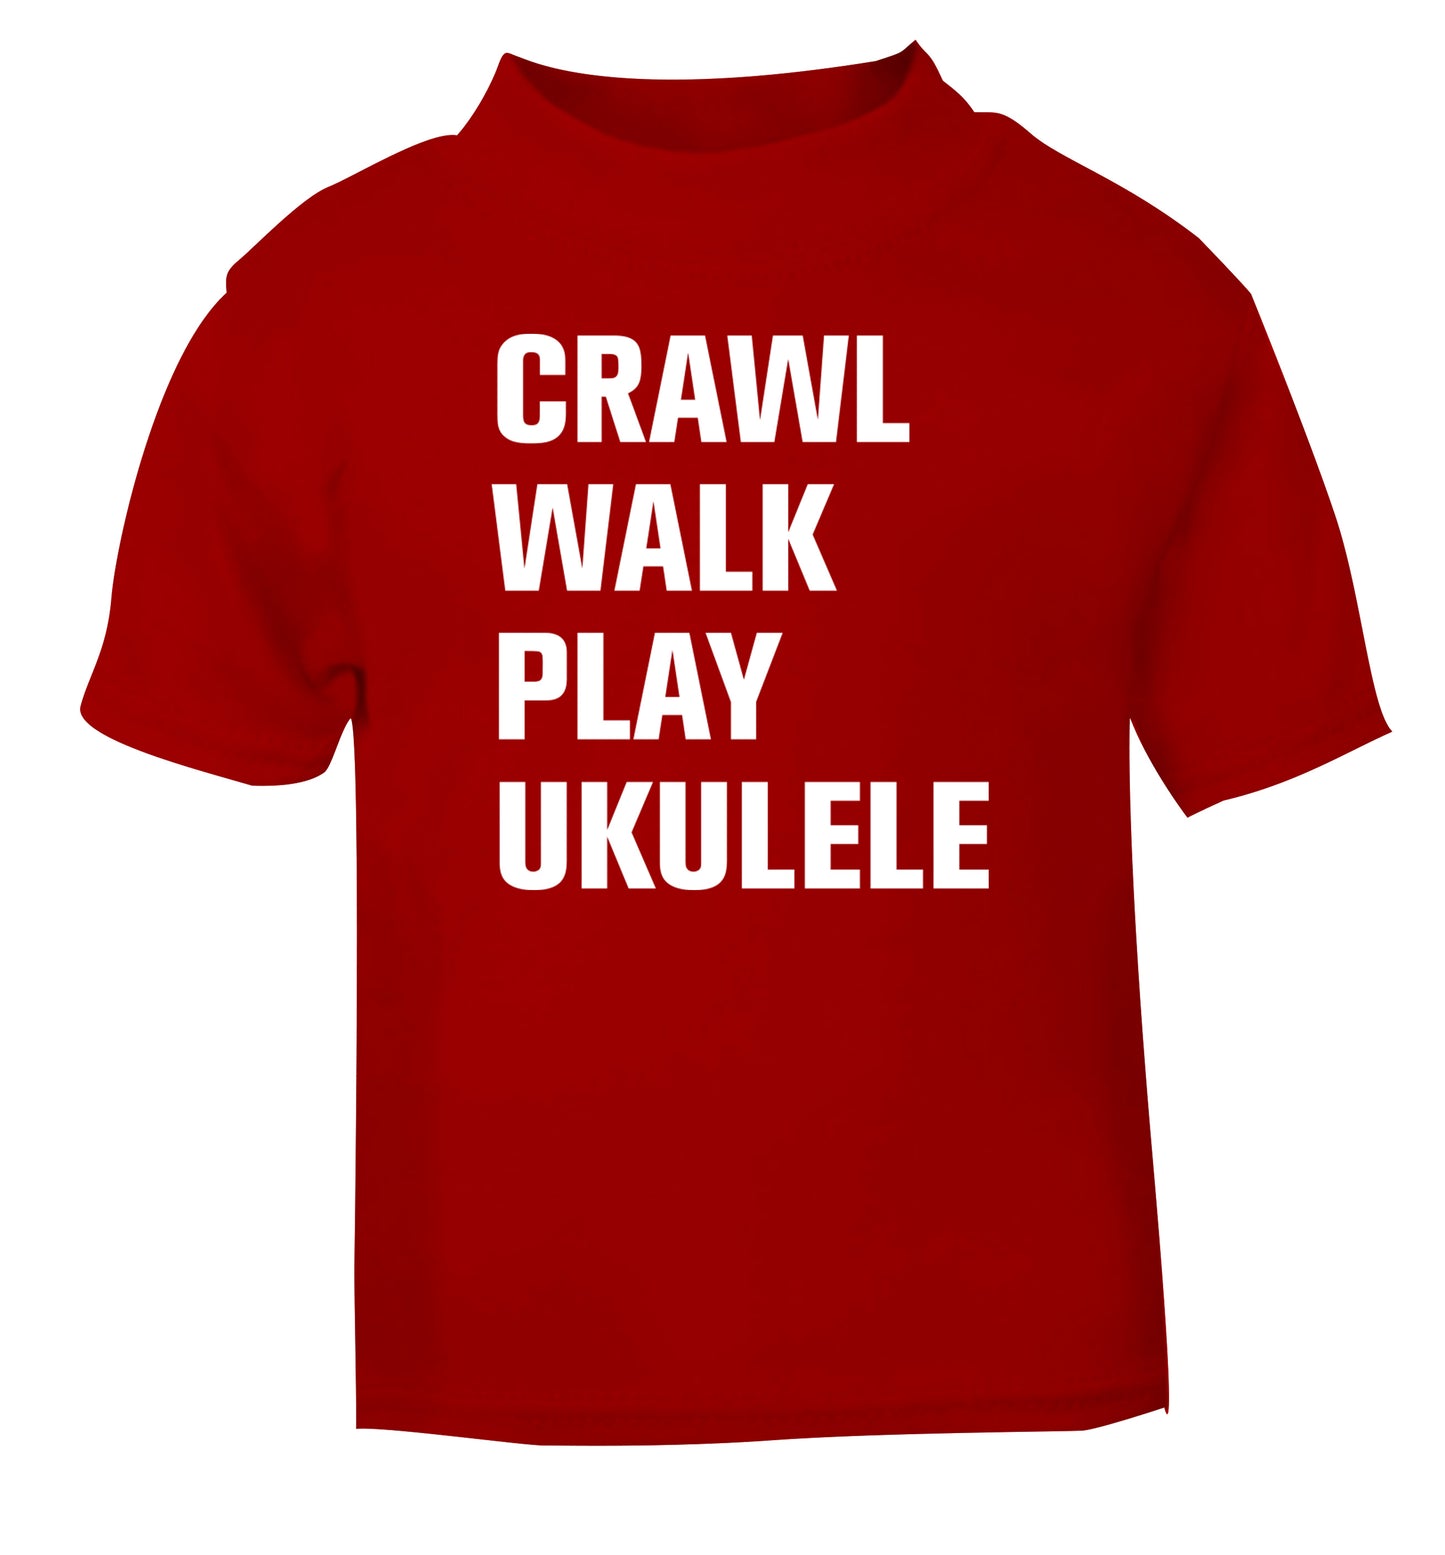 Crawl walk play ukulele red Baby Toddler Tshirt 2 Years